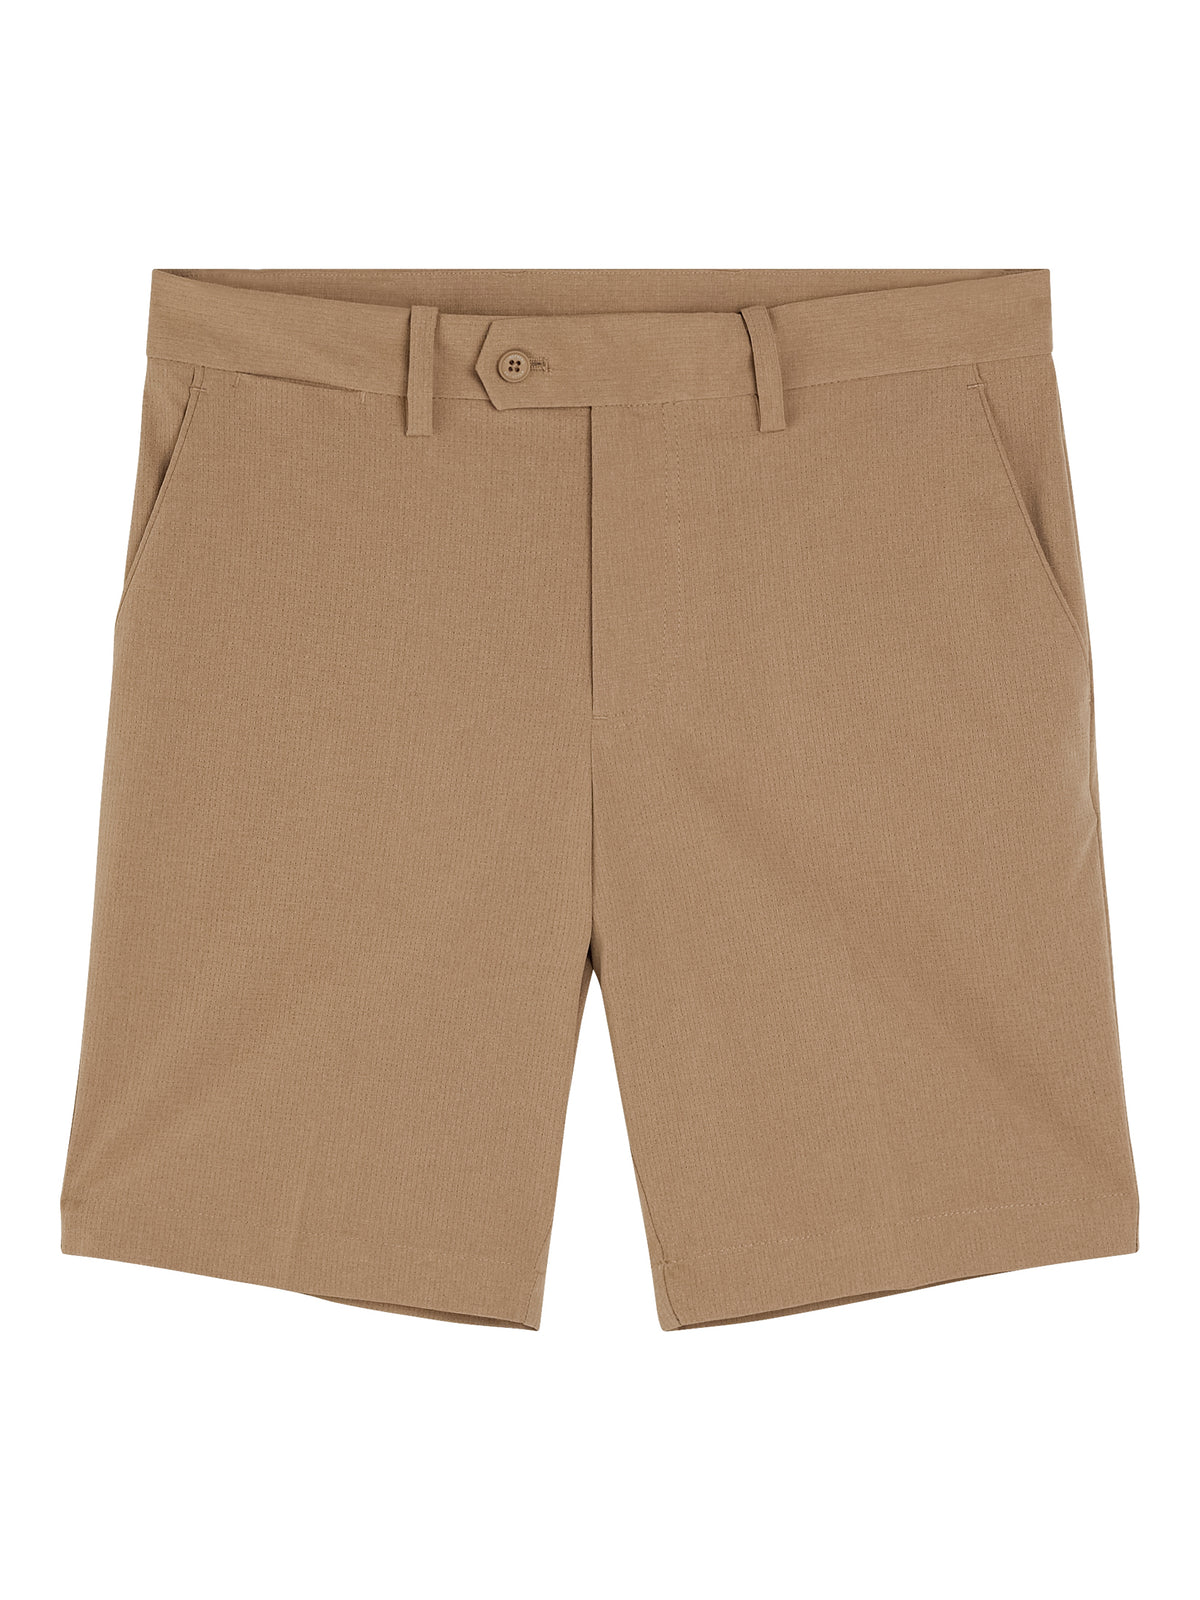 Vent Tight Shorts / Tiger Brown